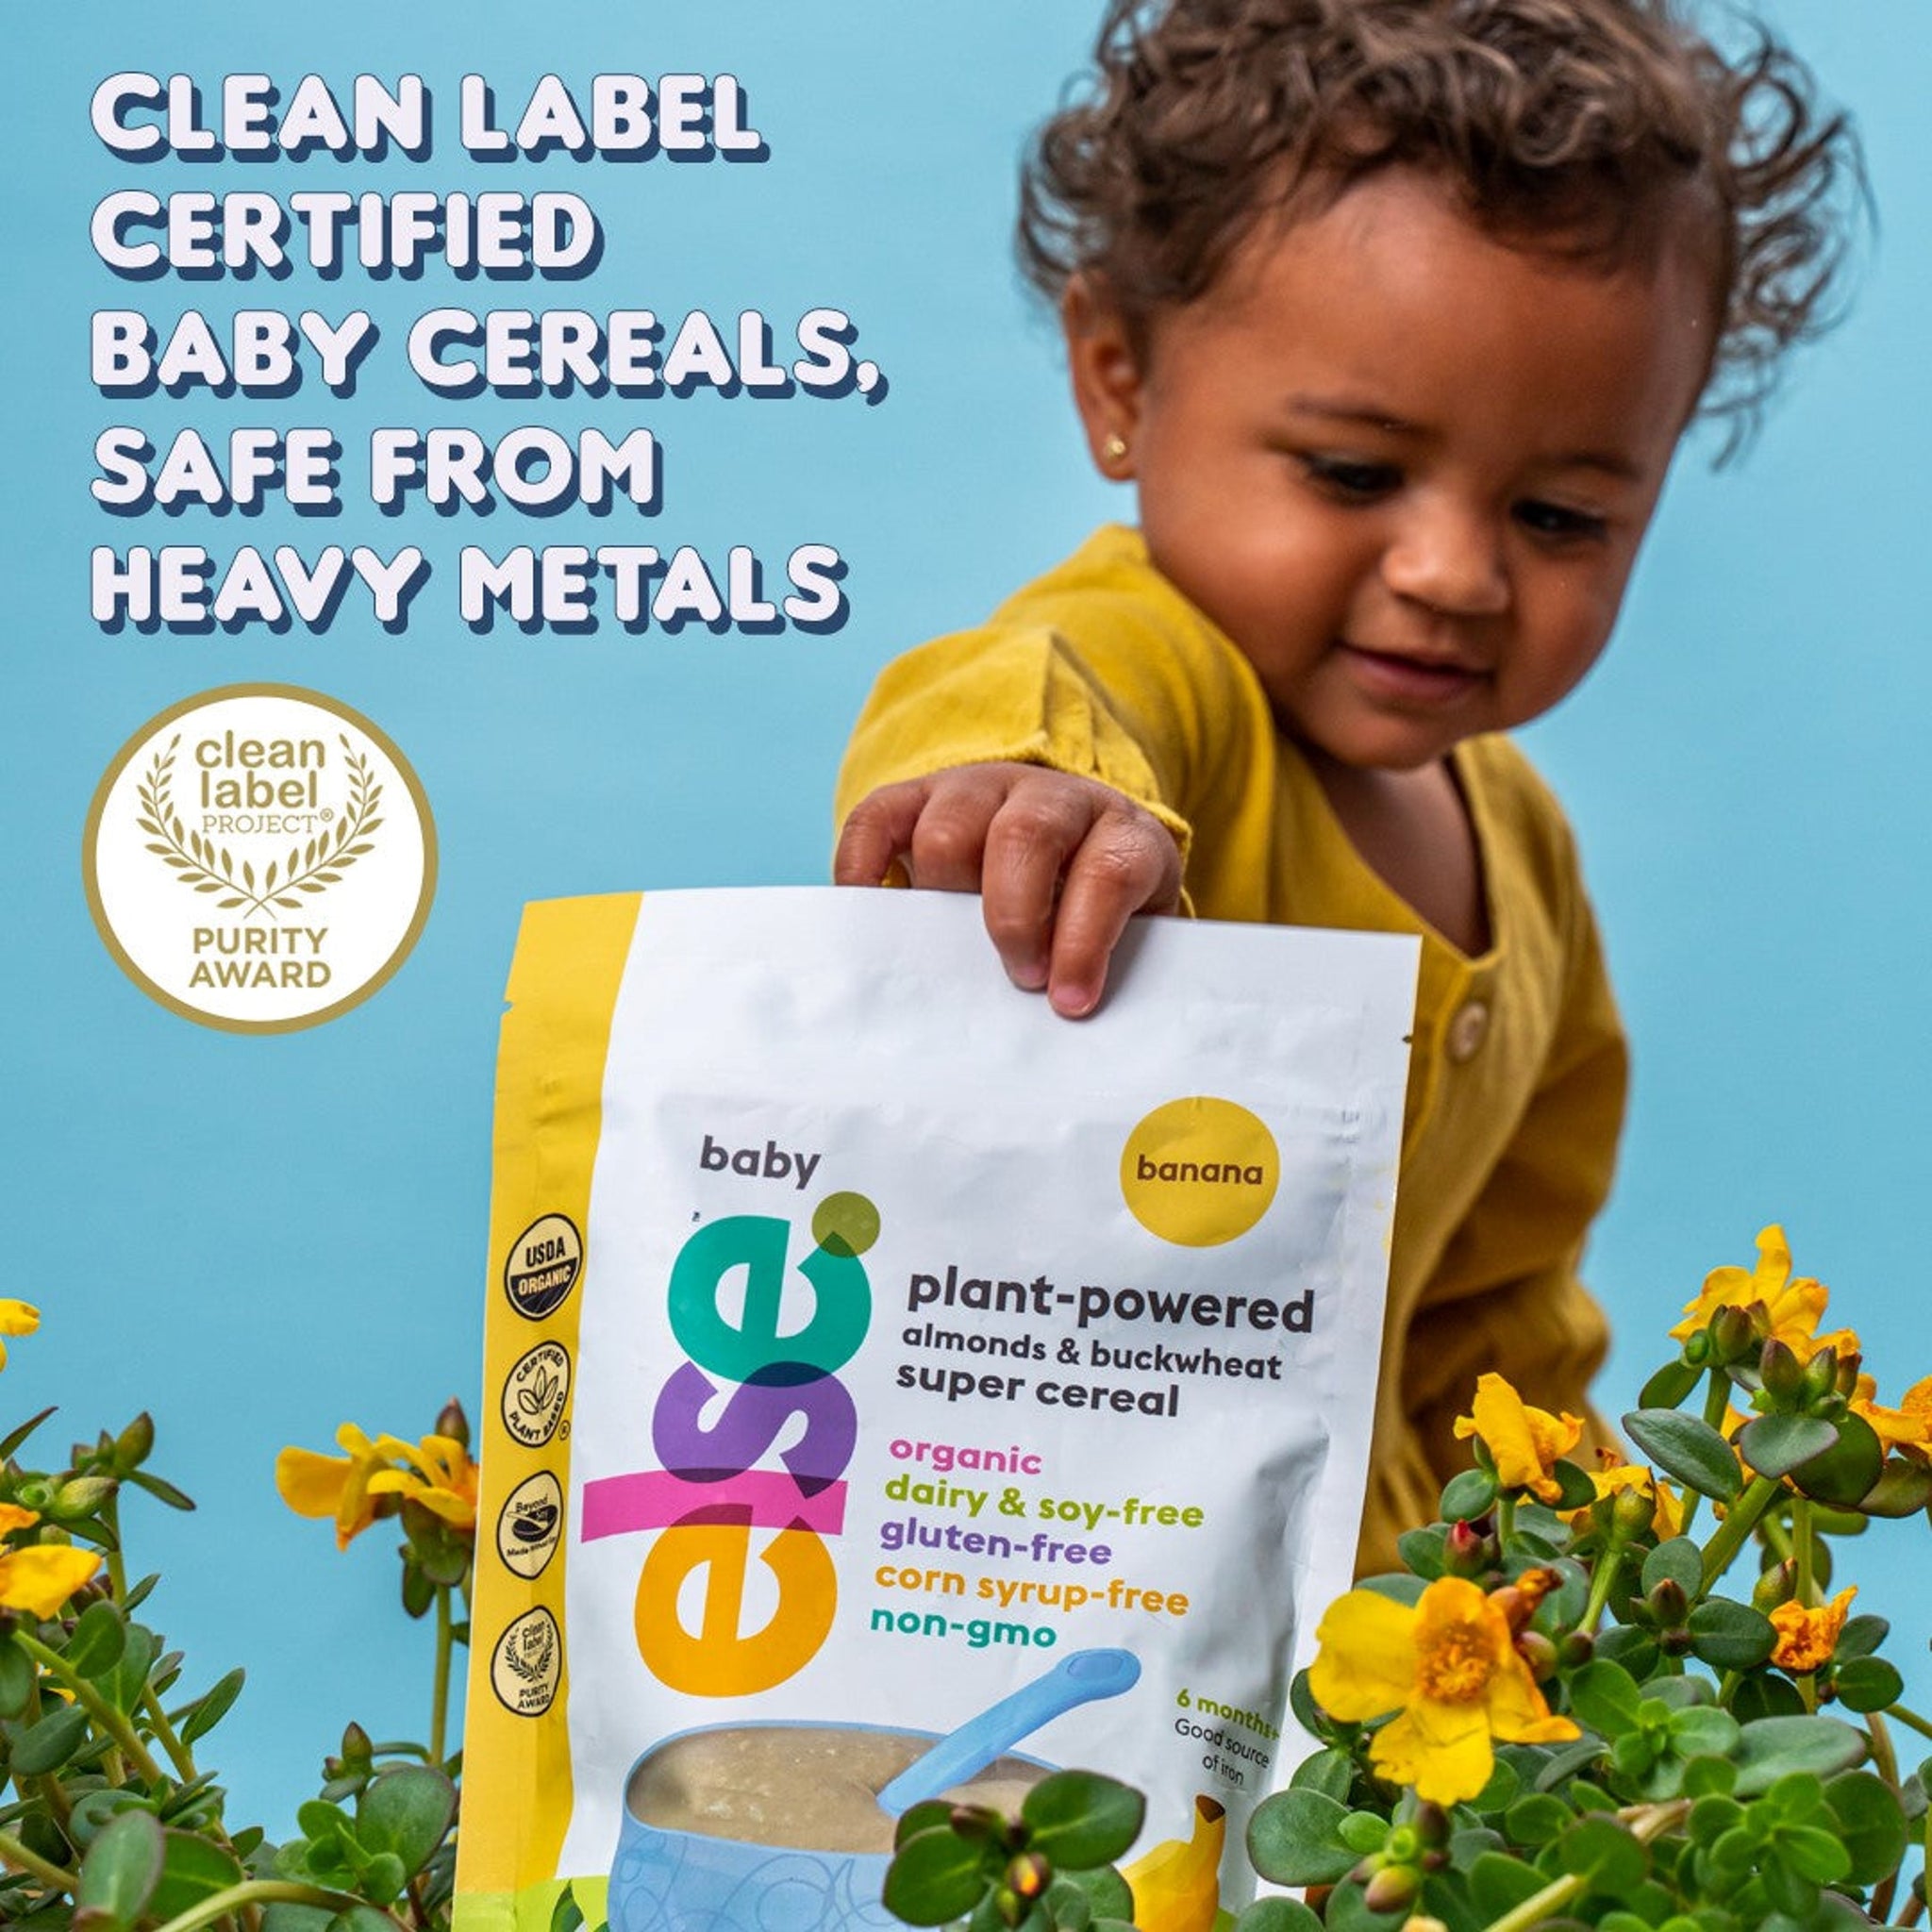 else baby cereals - snack for 10 month old